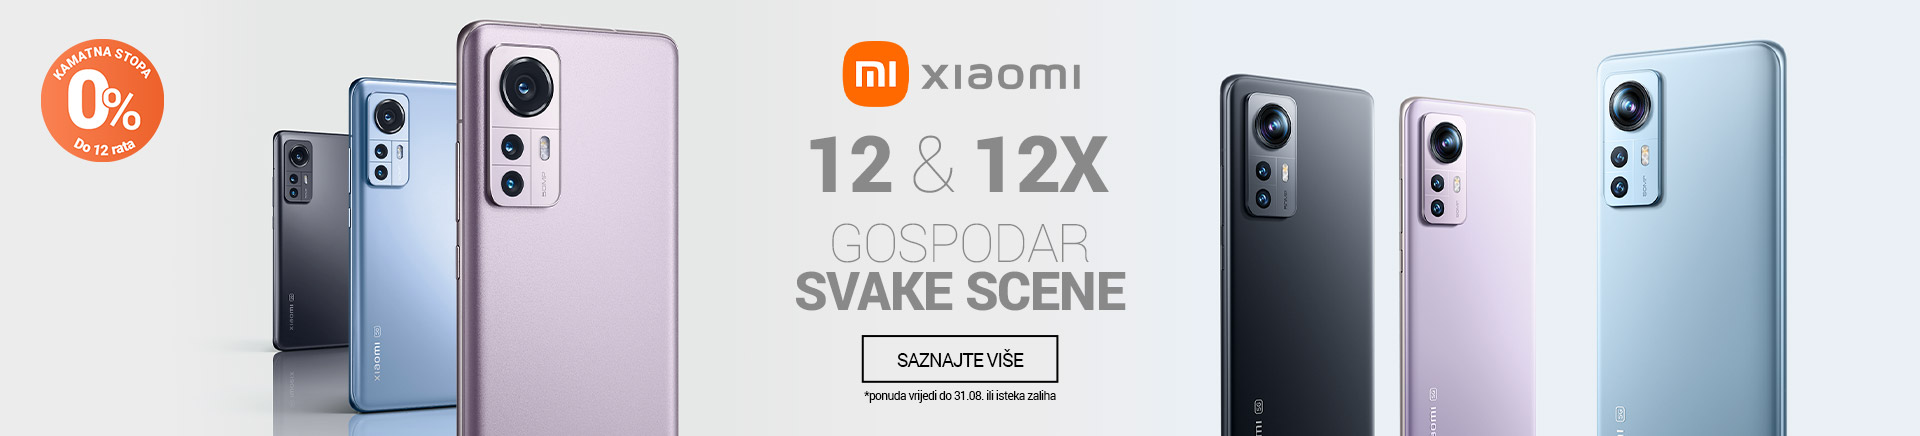 BA Xiaomi 12 &amp; 12X Gospodar svake scene MOBILE 380 X 436.jpg